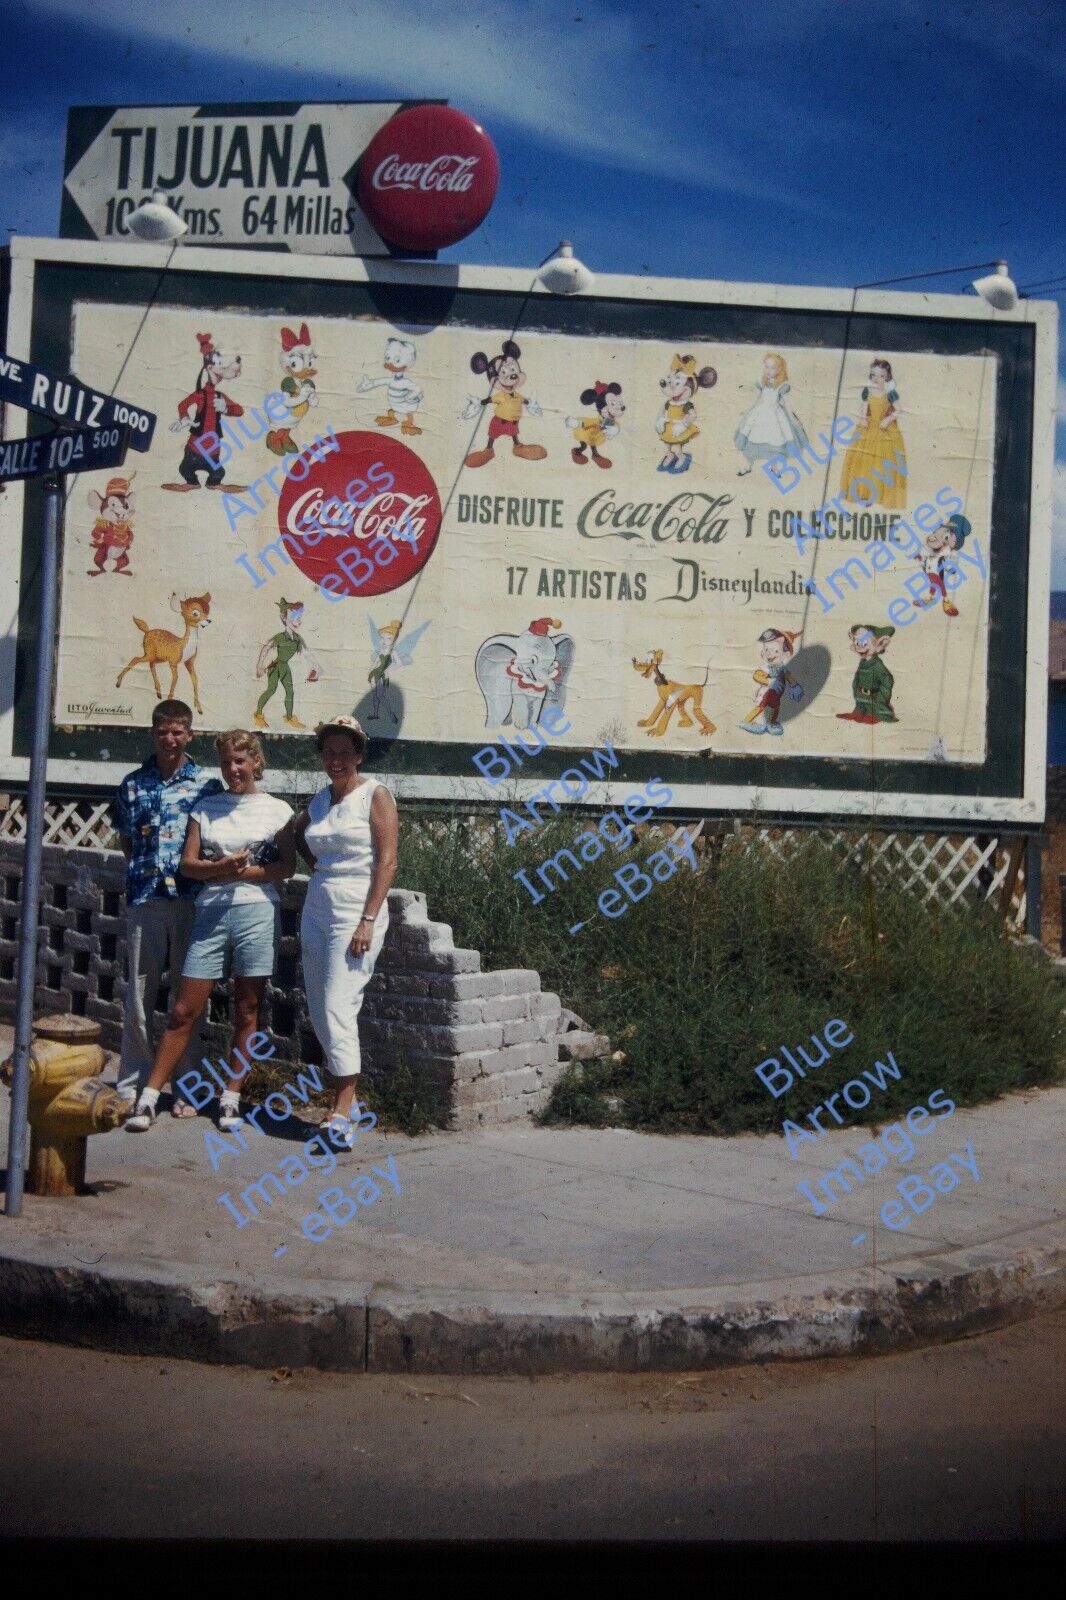 1950s 35mm slide Disneyland Billboard in Spanish Tijuana Coca-Cola #1565